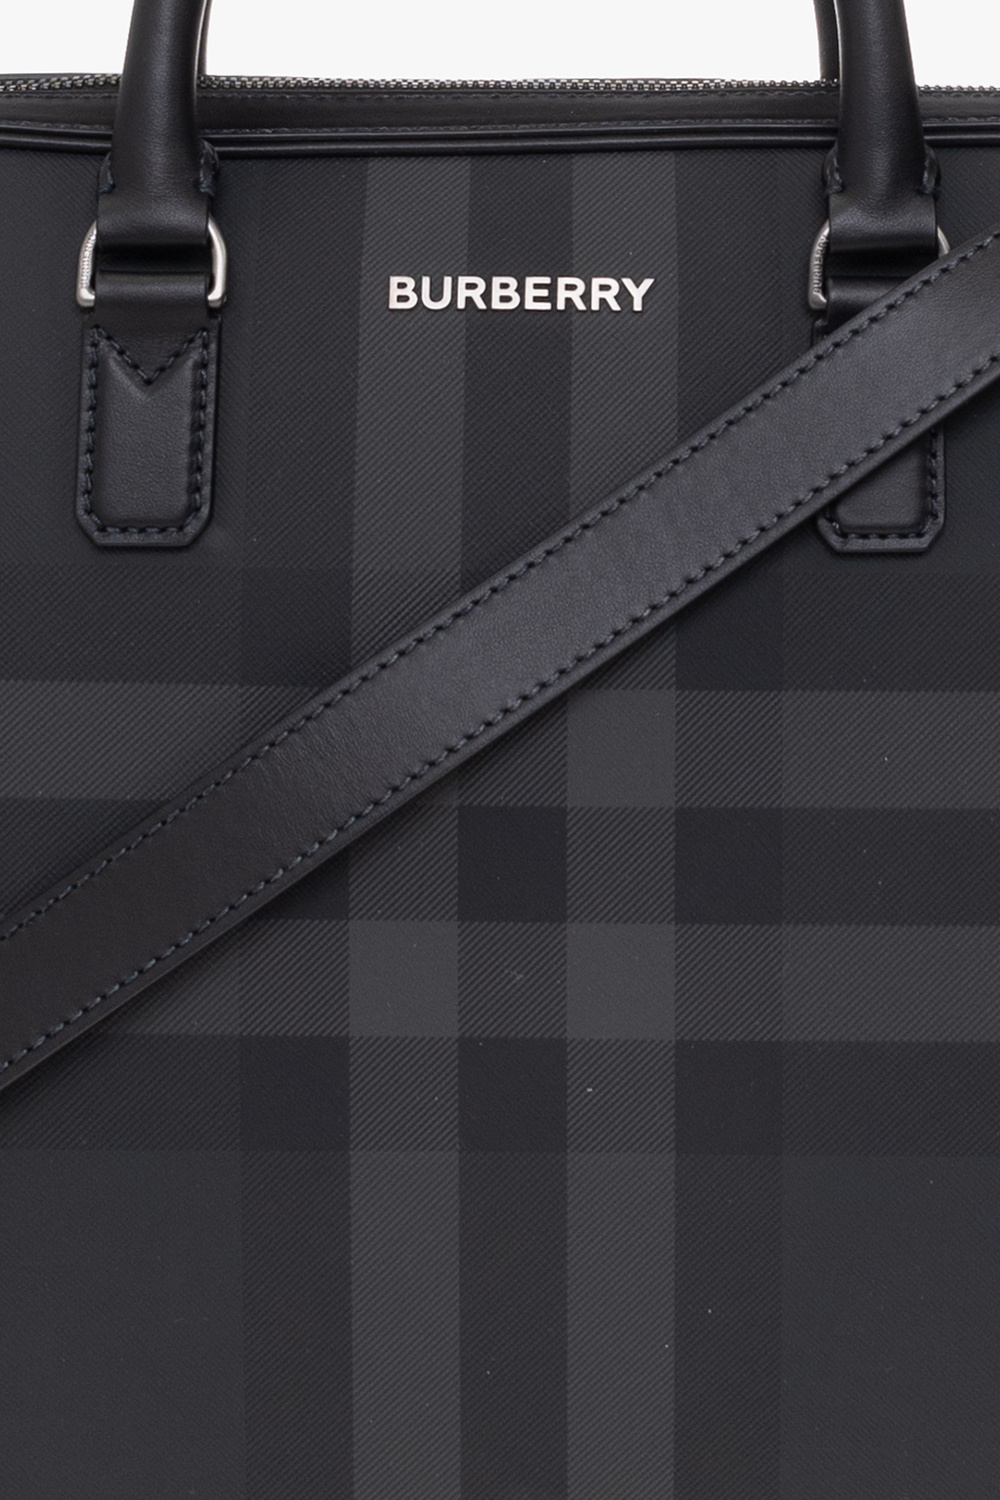 burberry into ‘Ainsworth’ briefcase